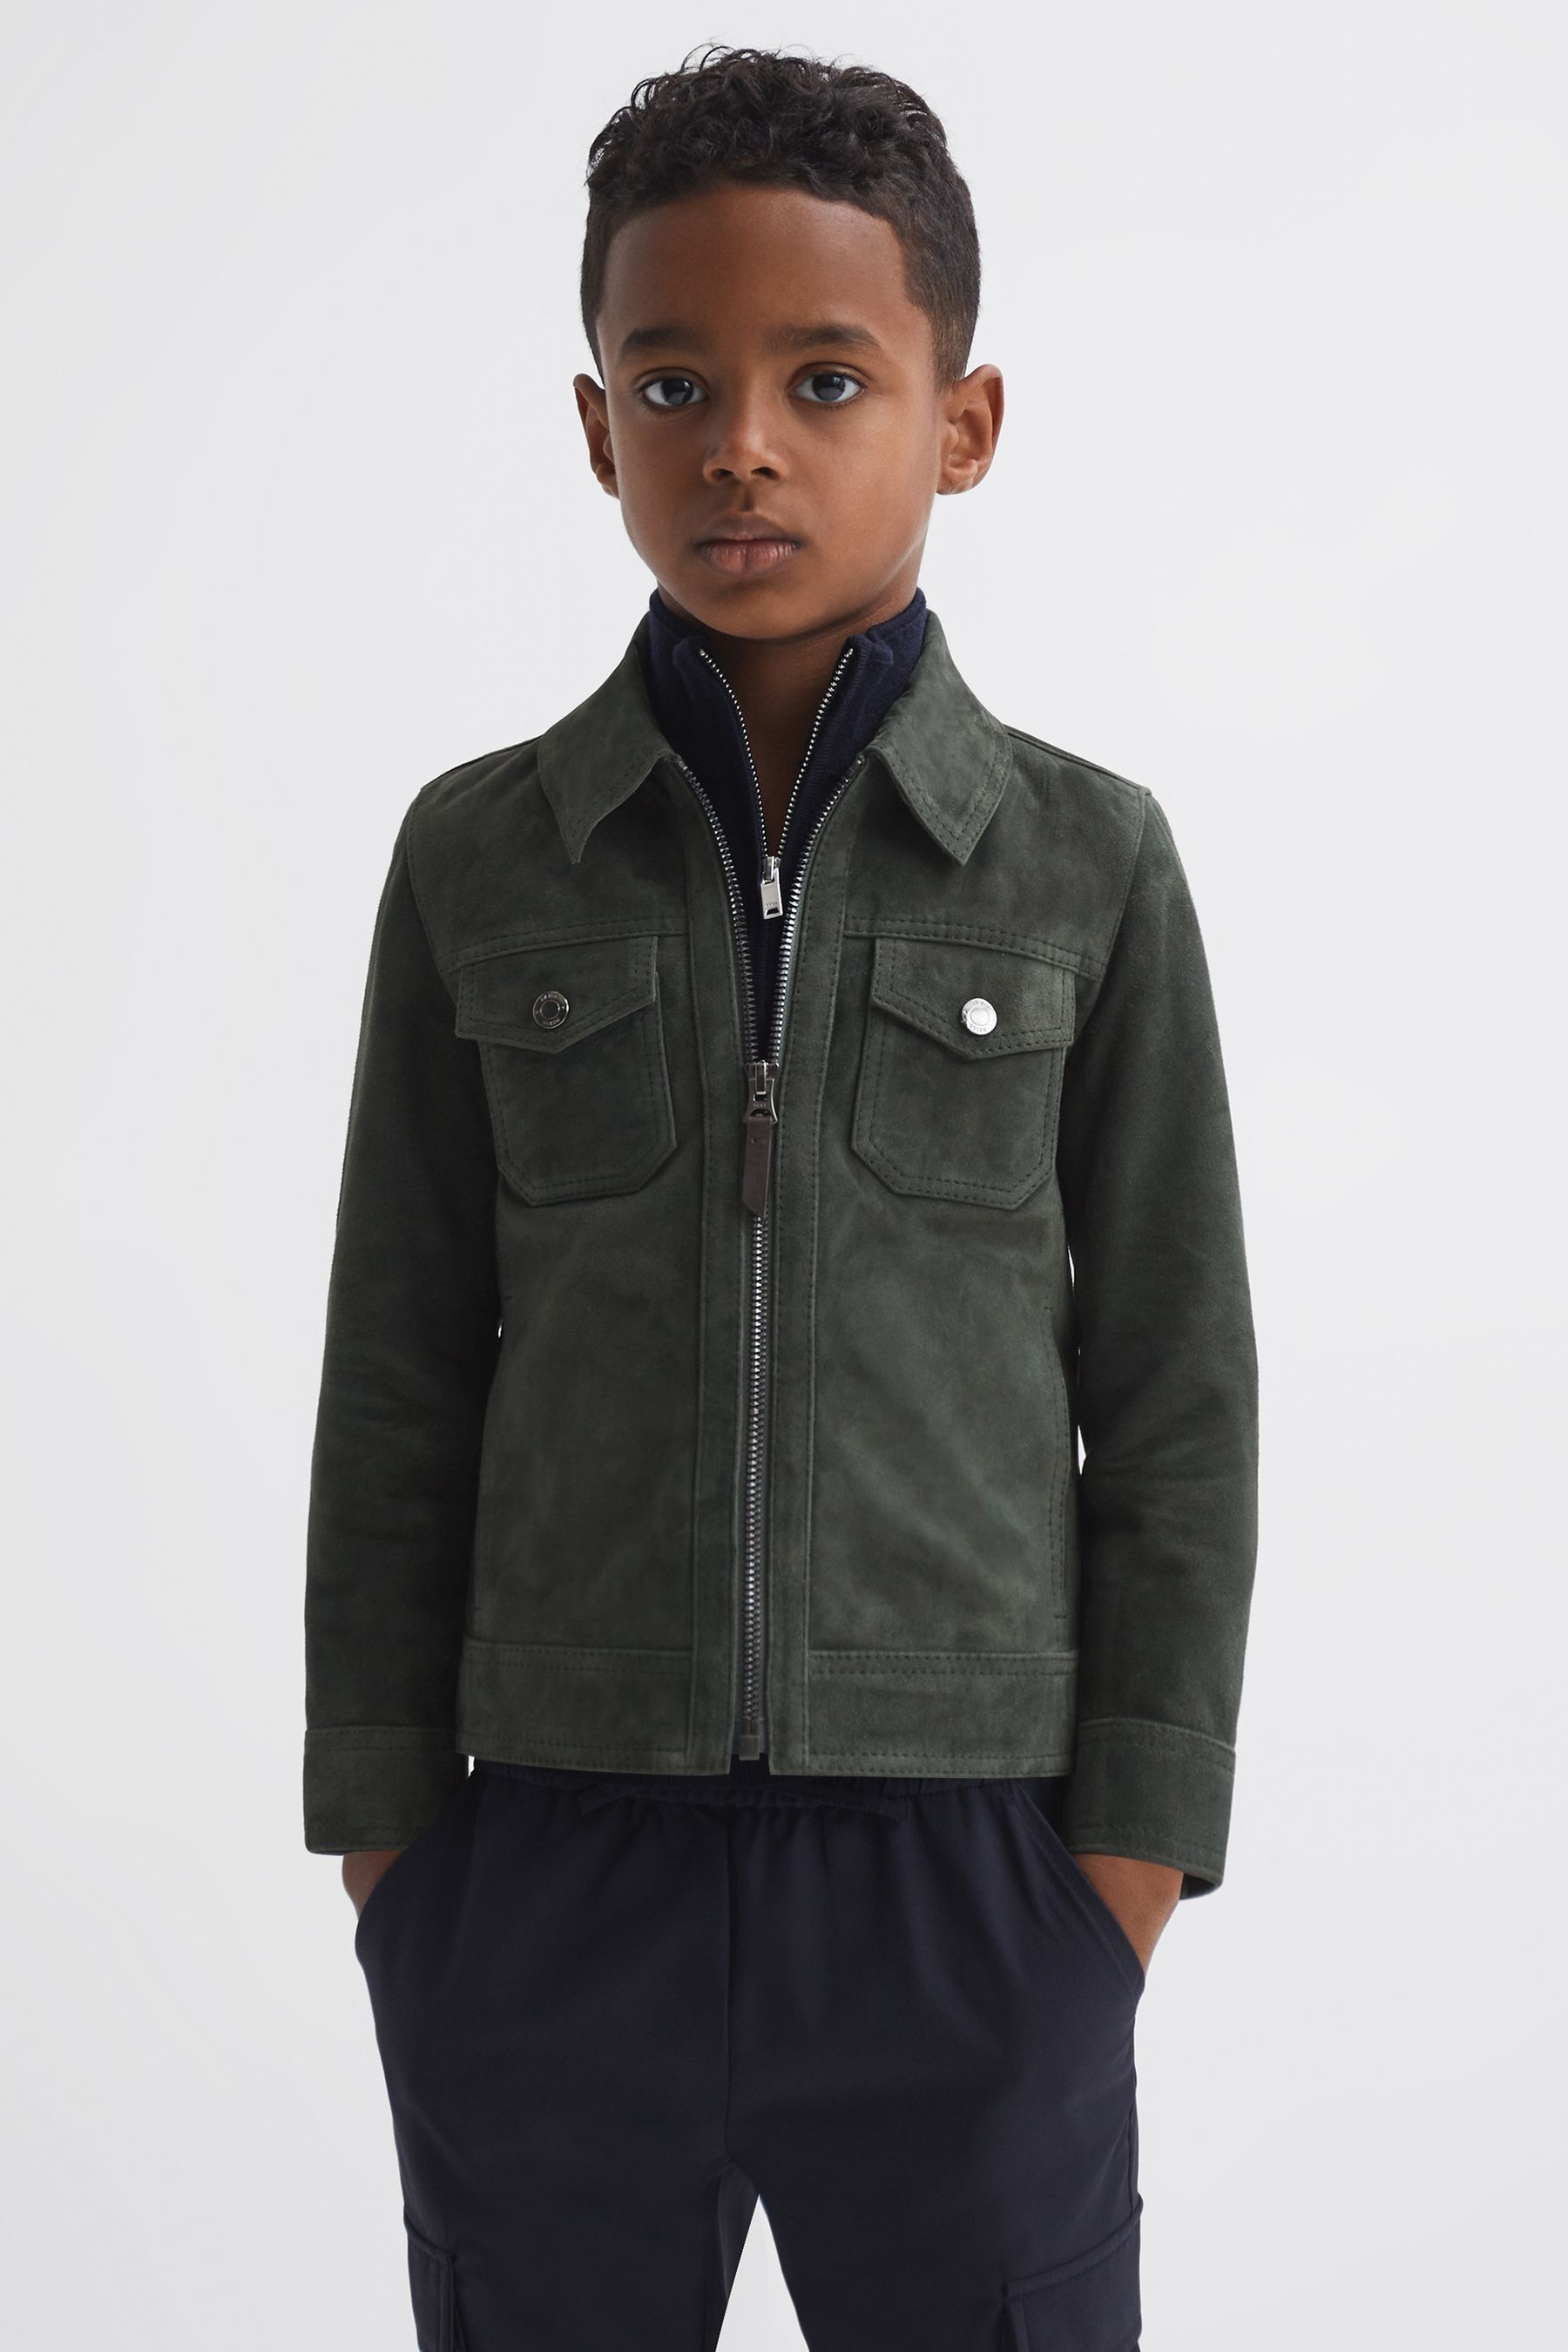 Reiss Kids' Pike - Forest Green Junior Suede Zip Through Jacket, Age 5-6 Years